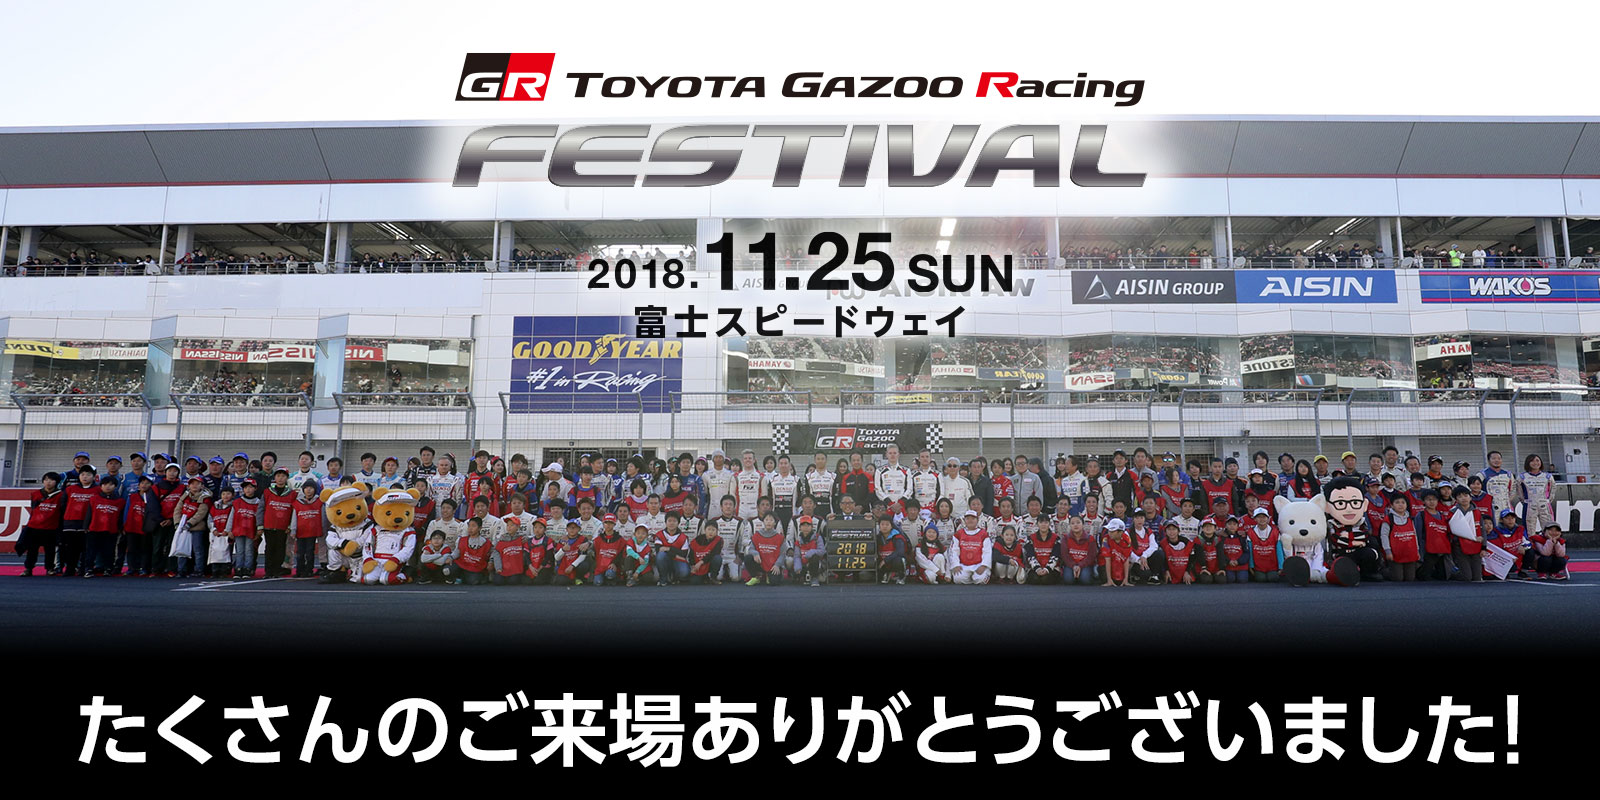 TOYOTA GAZOO Racing FESTIVAL - 2018.11.25 at FUJI SPEEDWAY